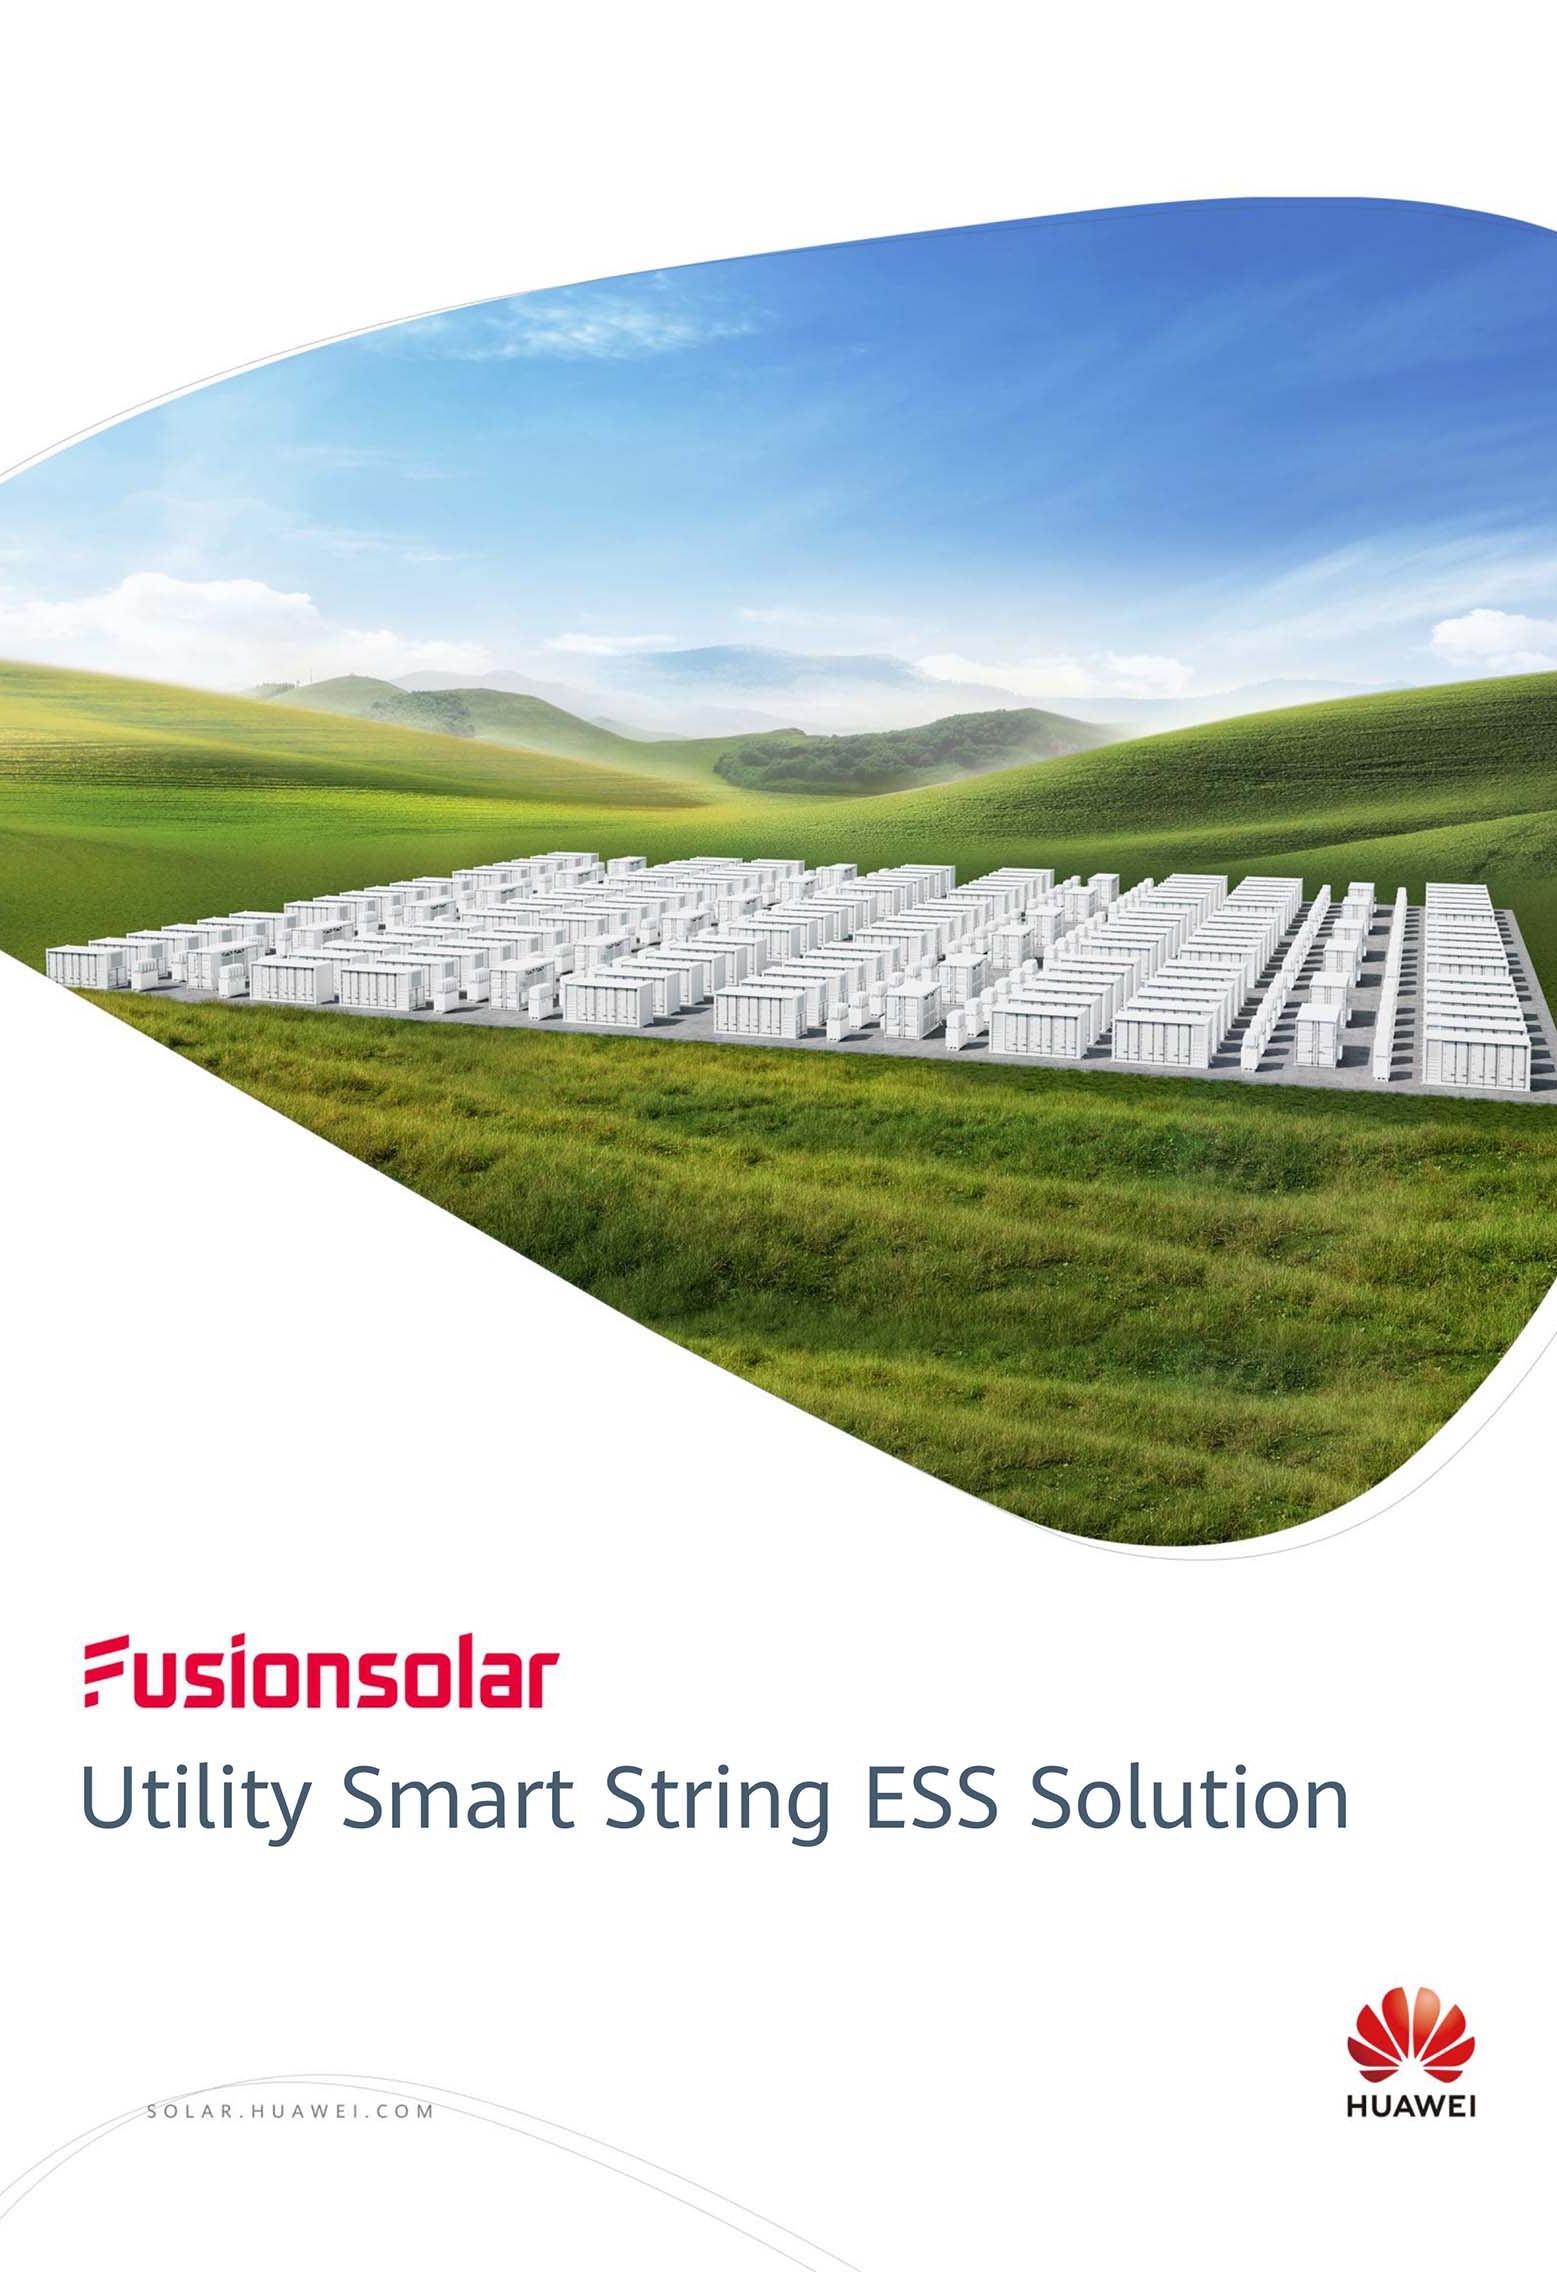 FusionSolar Utility Smart String ESS Solution